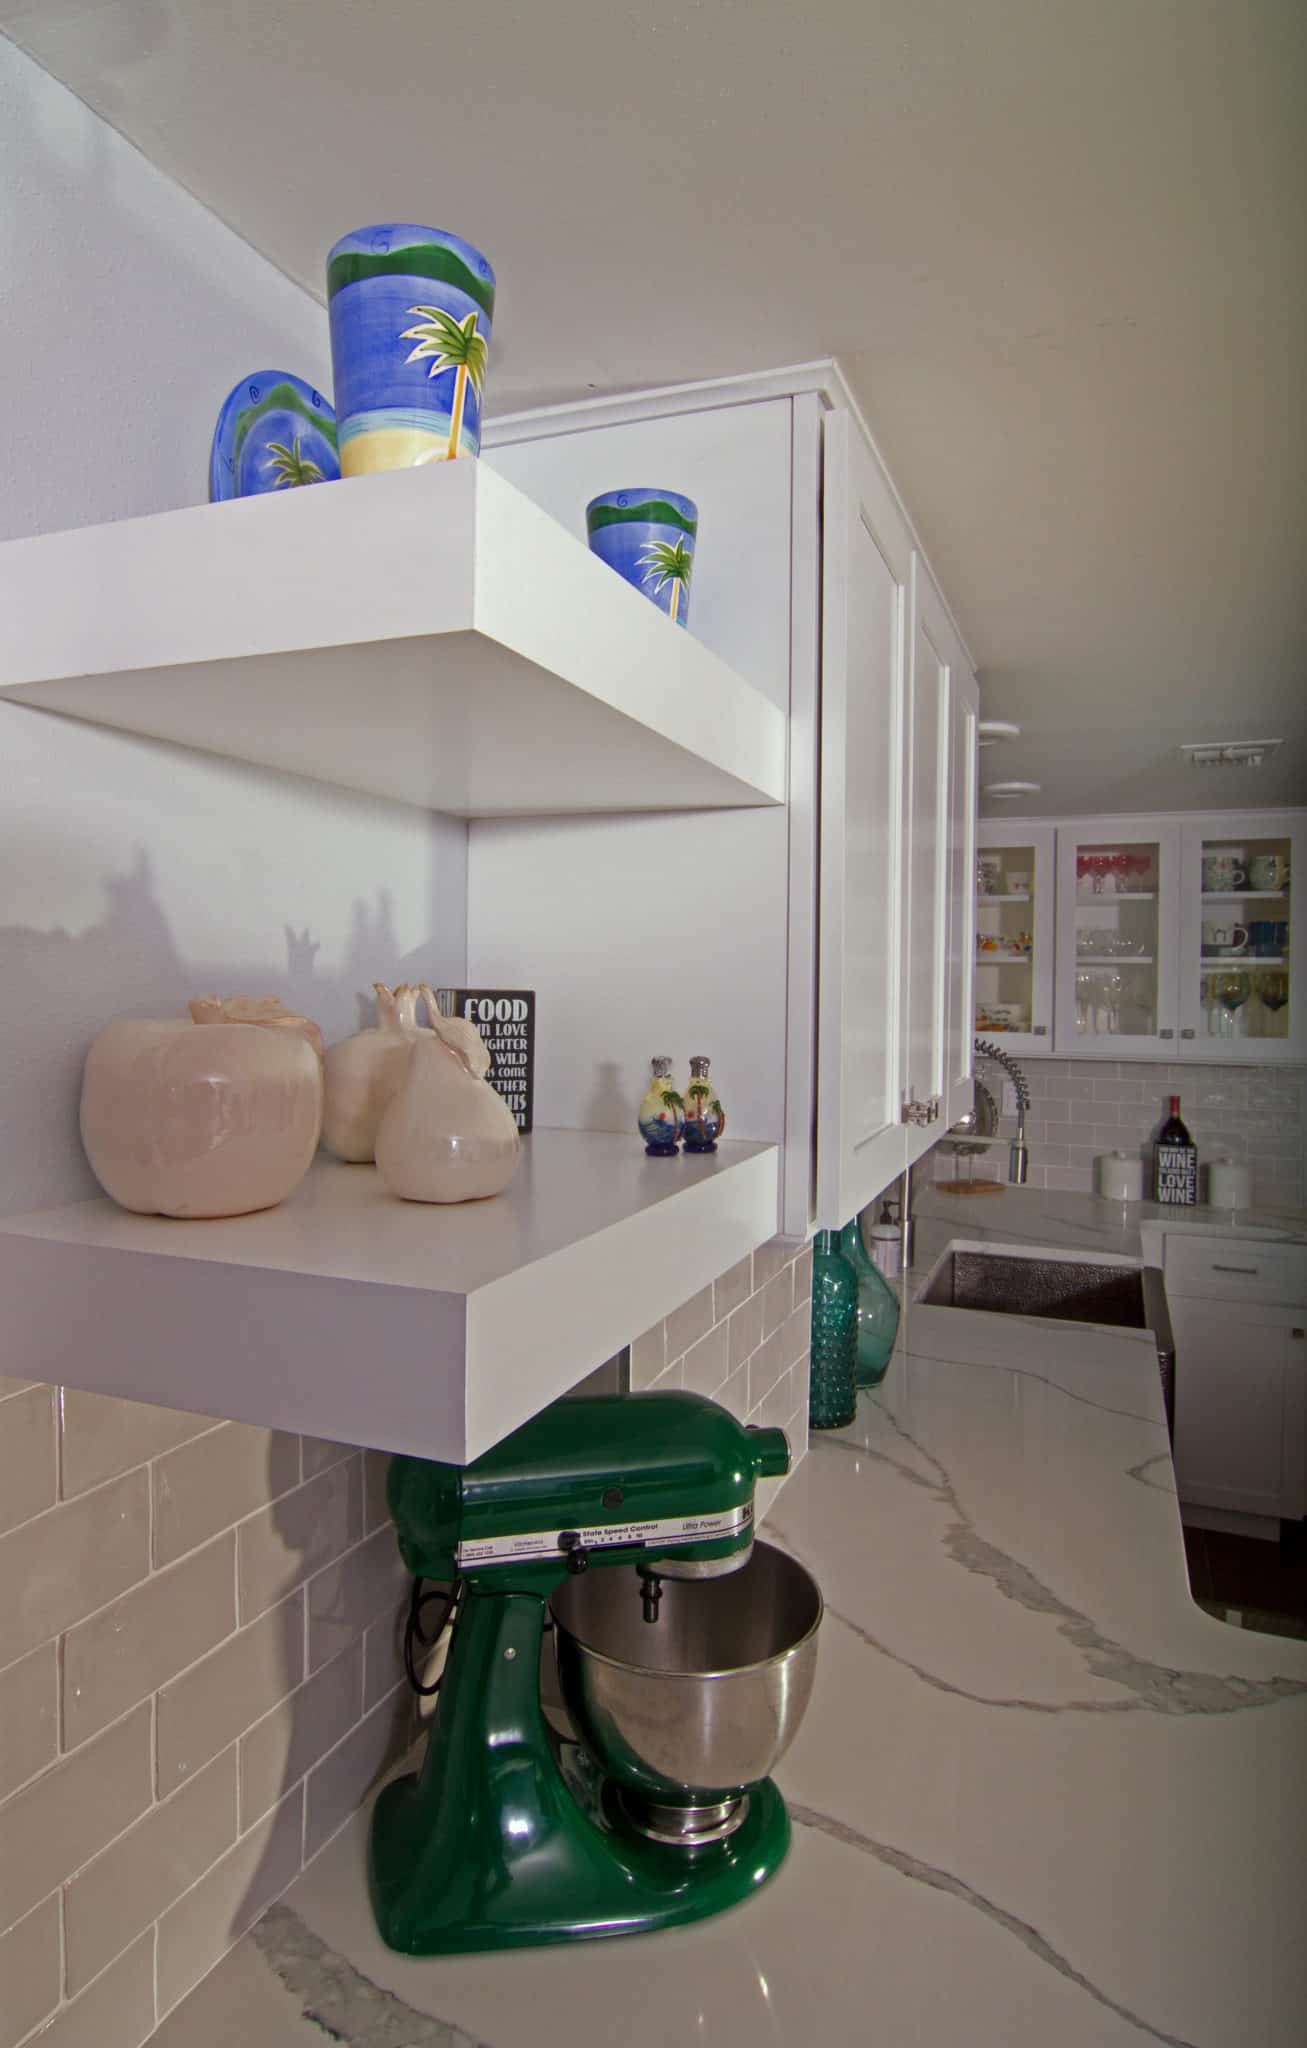 mccabinet kitchen shelf